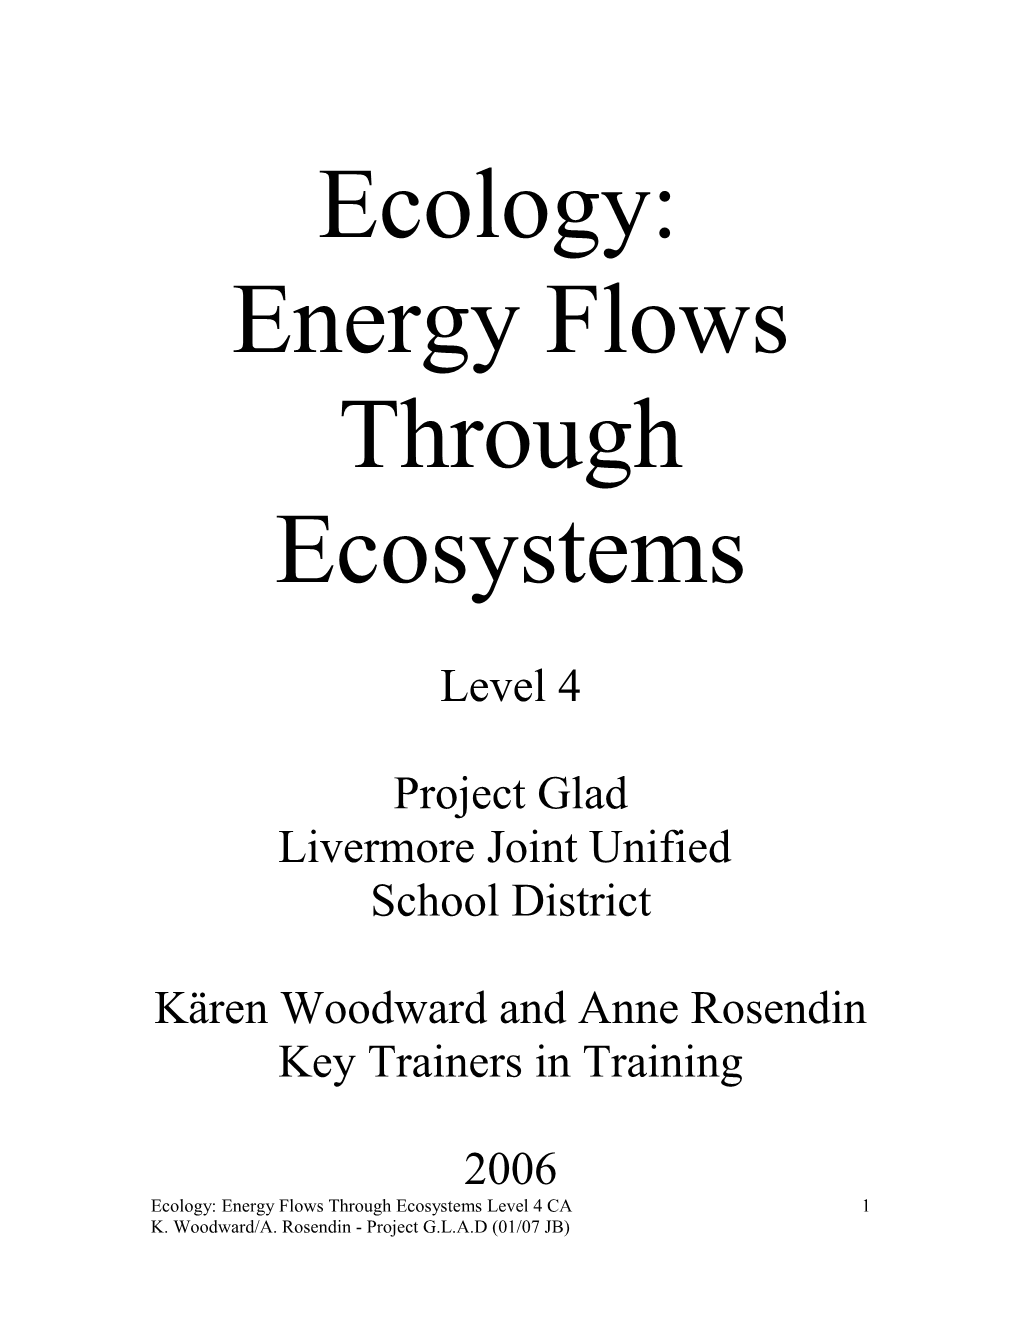 Energy Flows Through Ecosystems